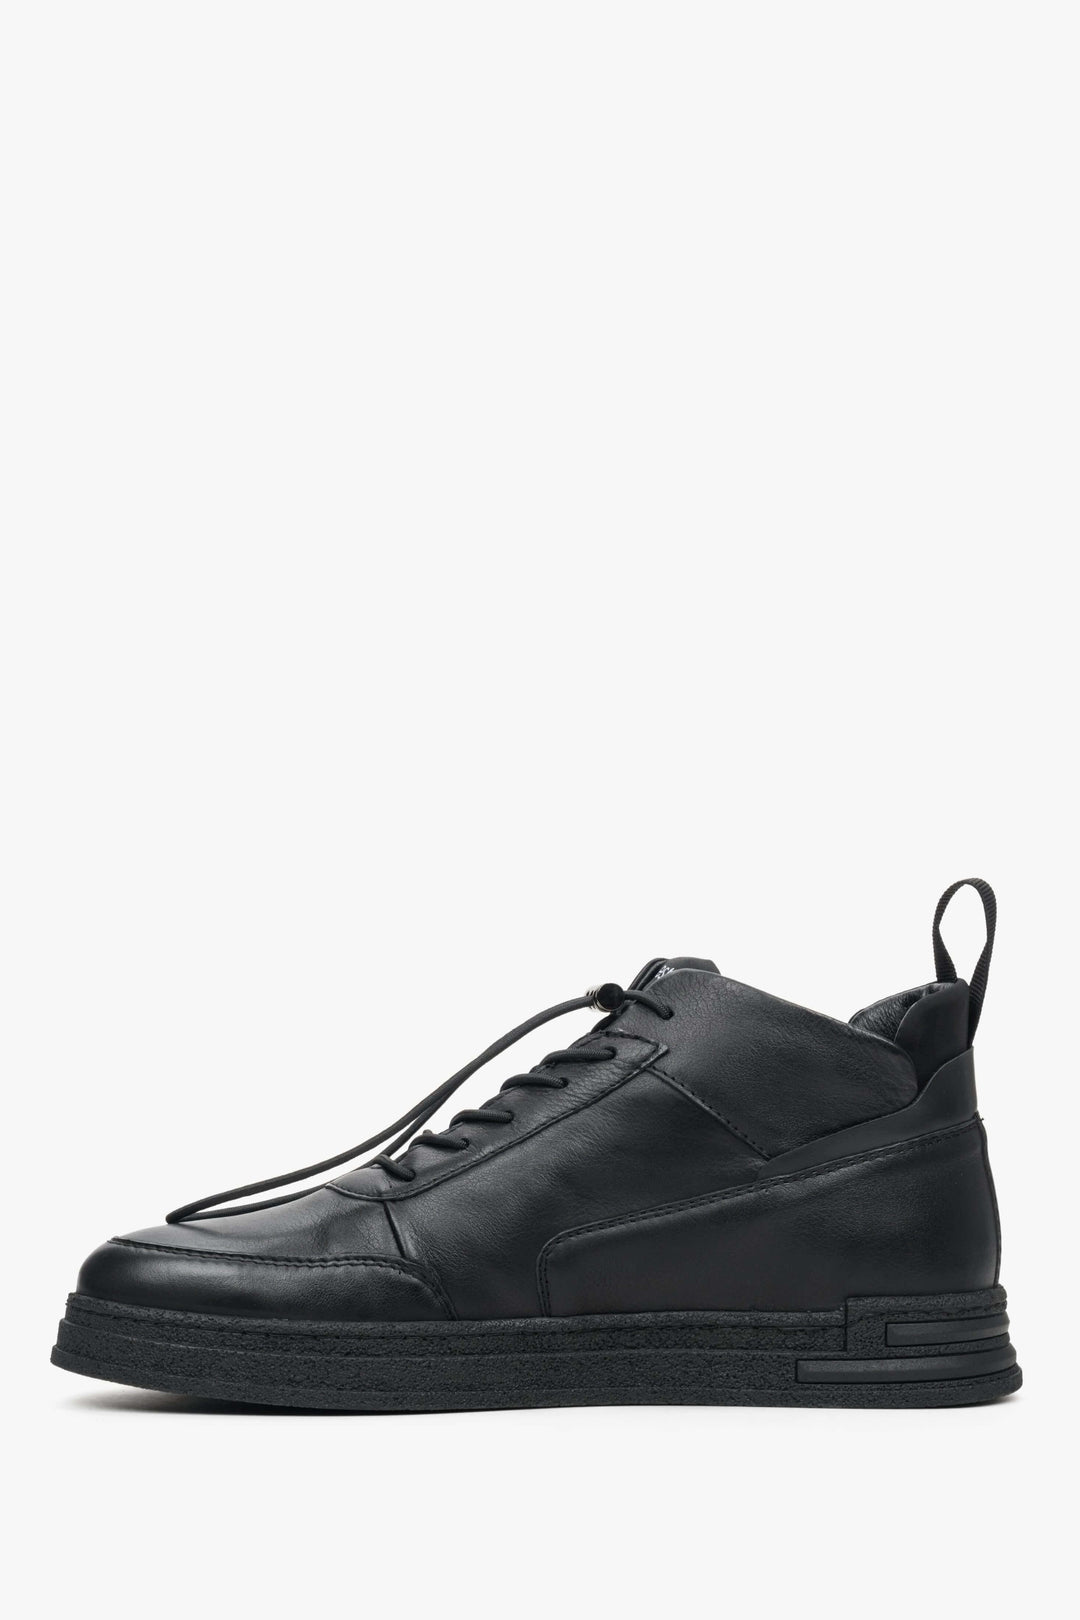 Men's sneakers in black color from genuine leather Estro - shoe profile.